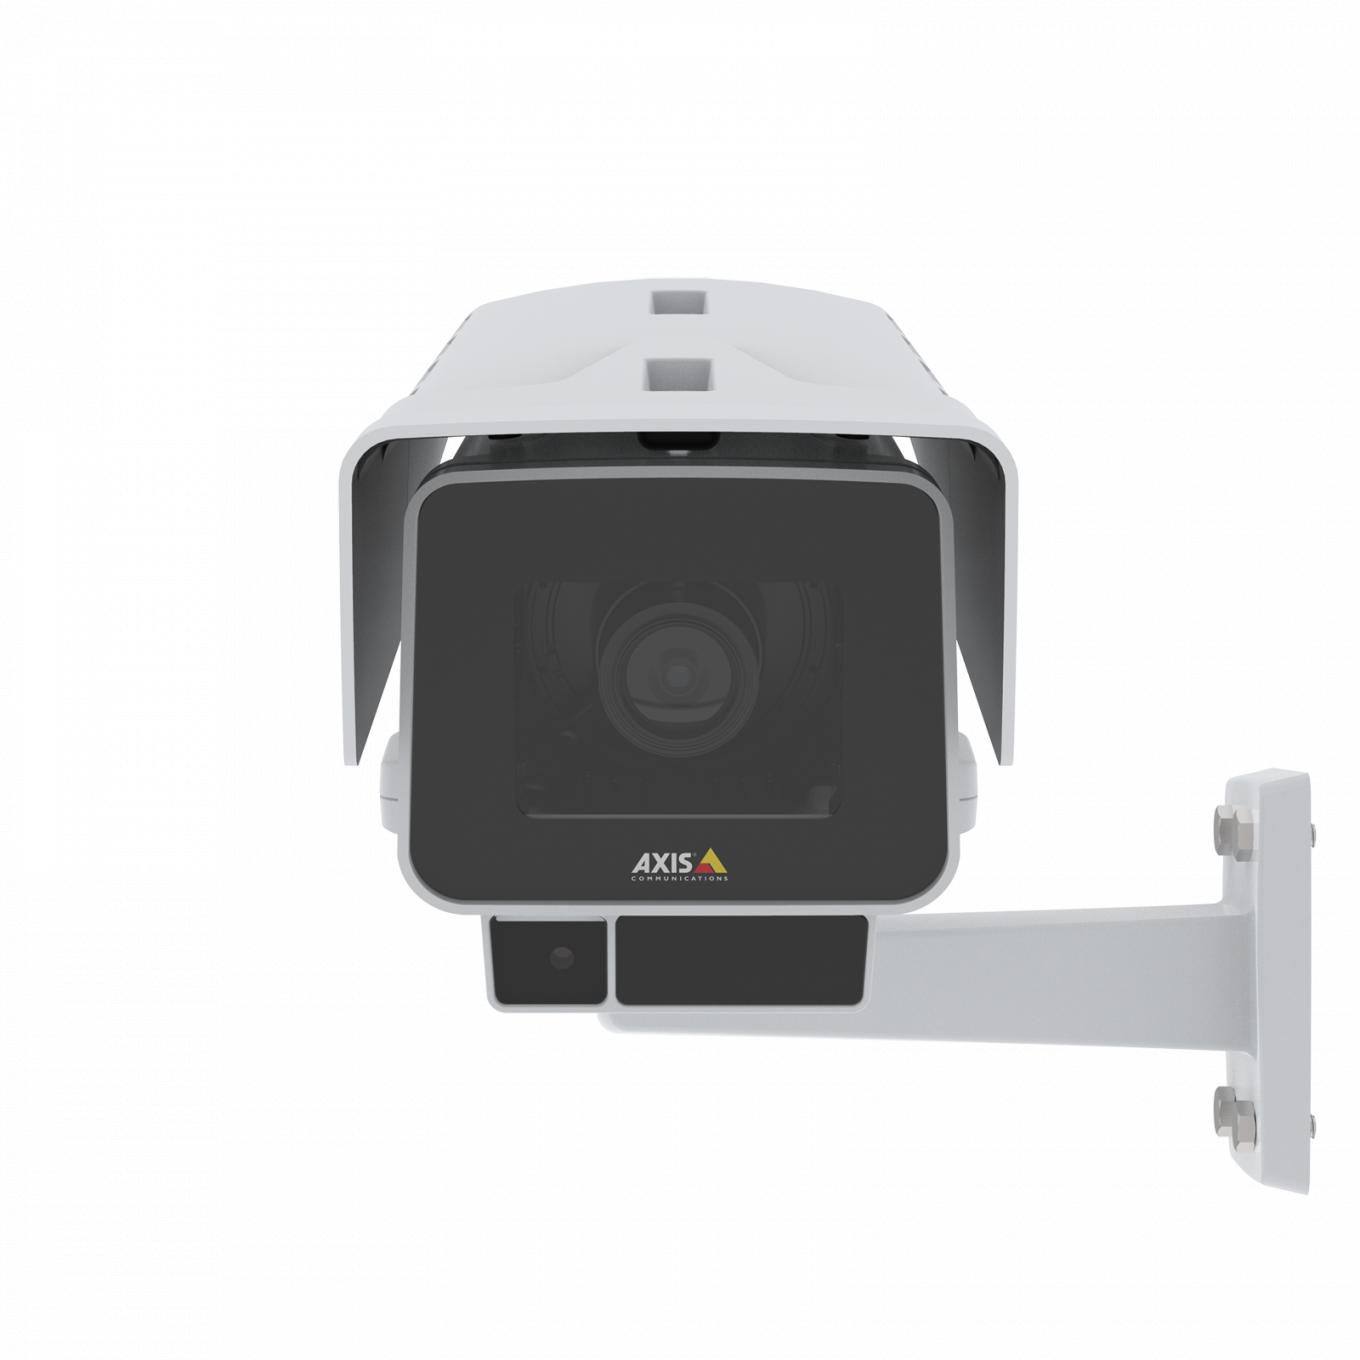 AXIS P1378-LE IP Camera는 흔들림 보정(EIS) 및 OptimizedIR을 갖추었습니다. 이 제품은 전면에서 본 것입니다.